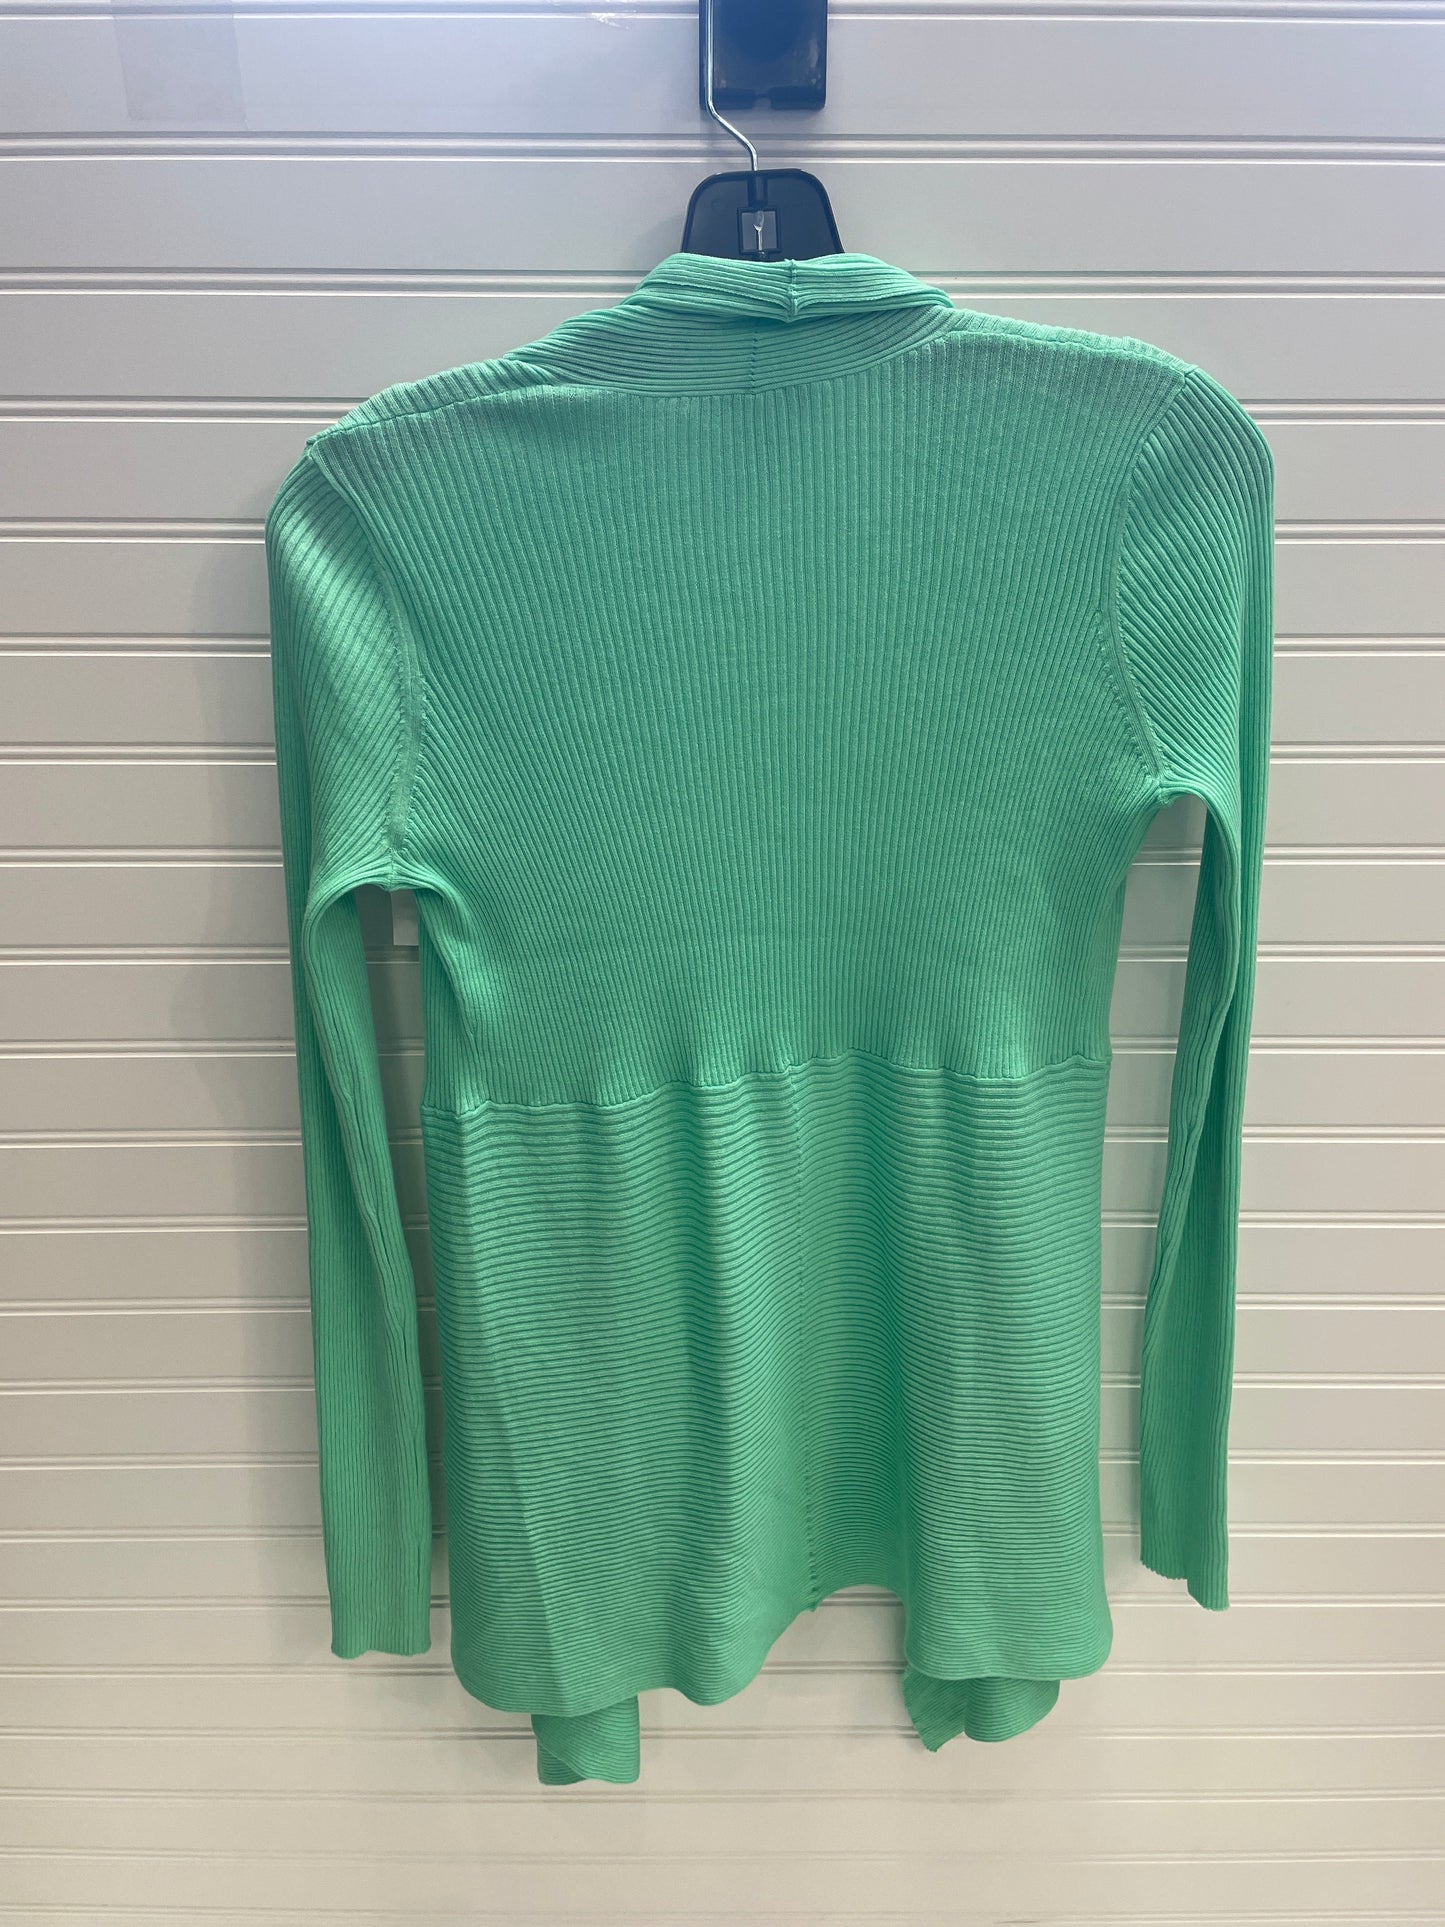 Green Cardigan Autumn Cashmere, Size S